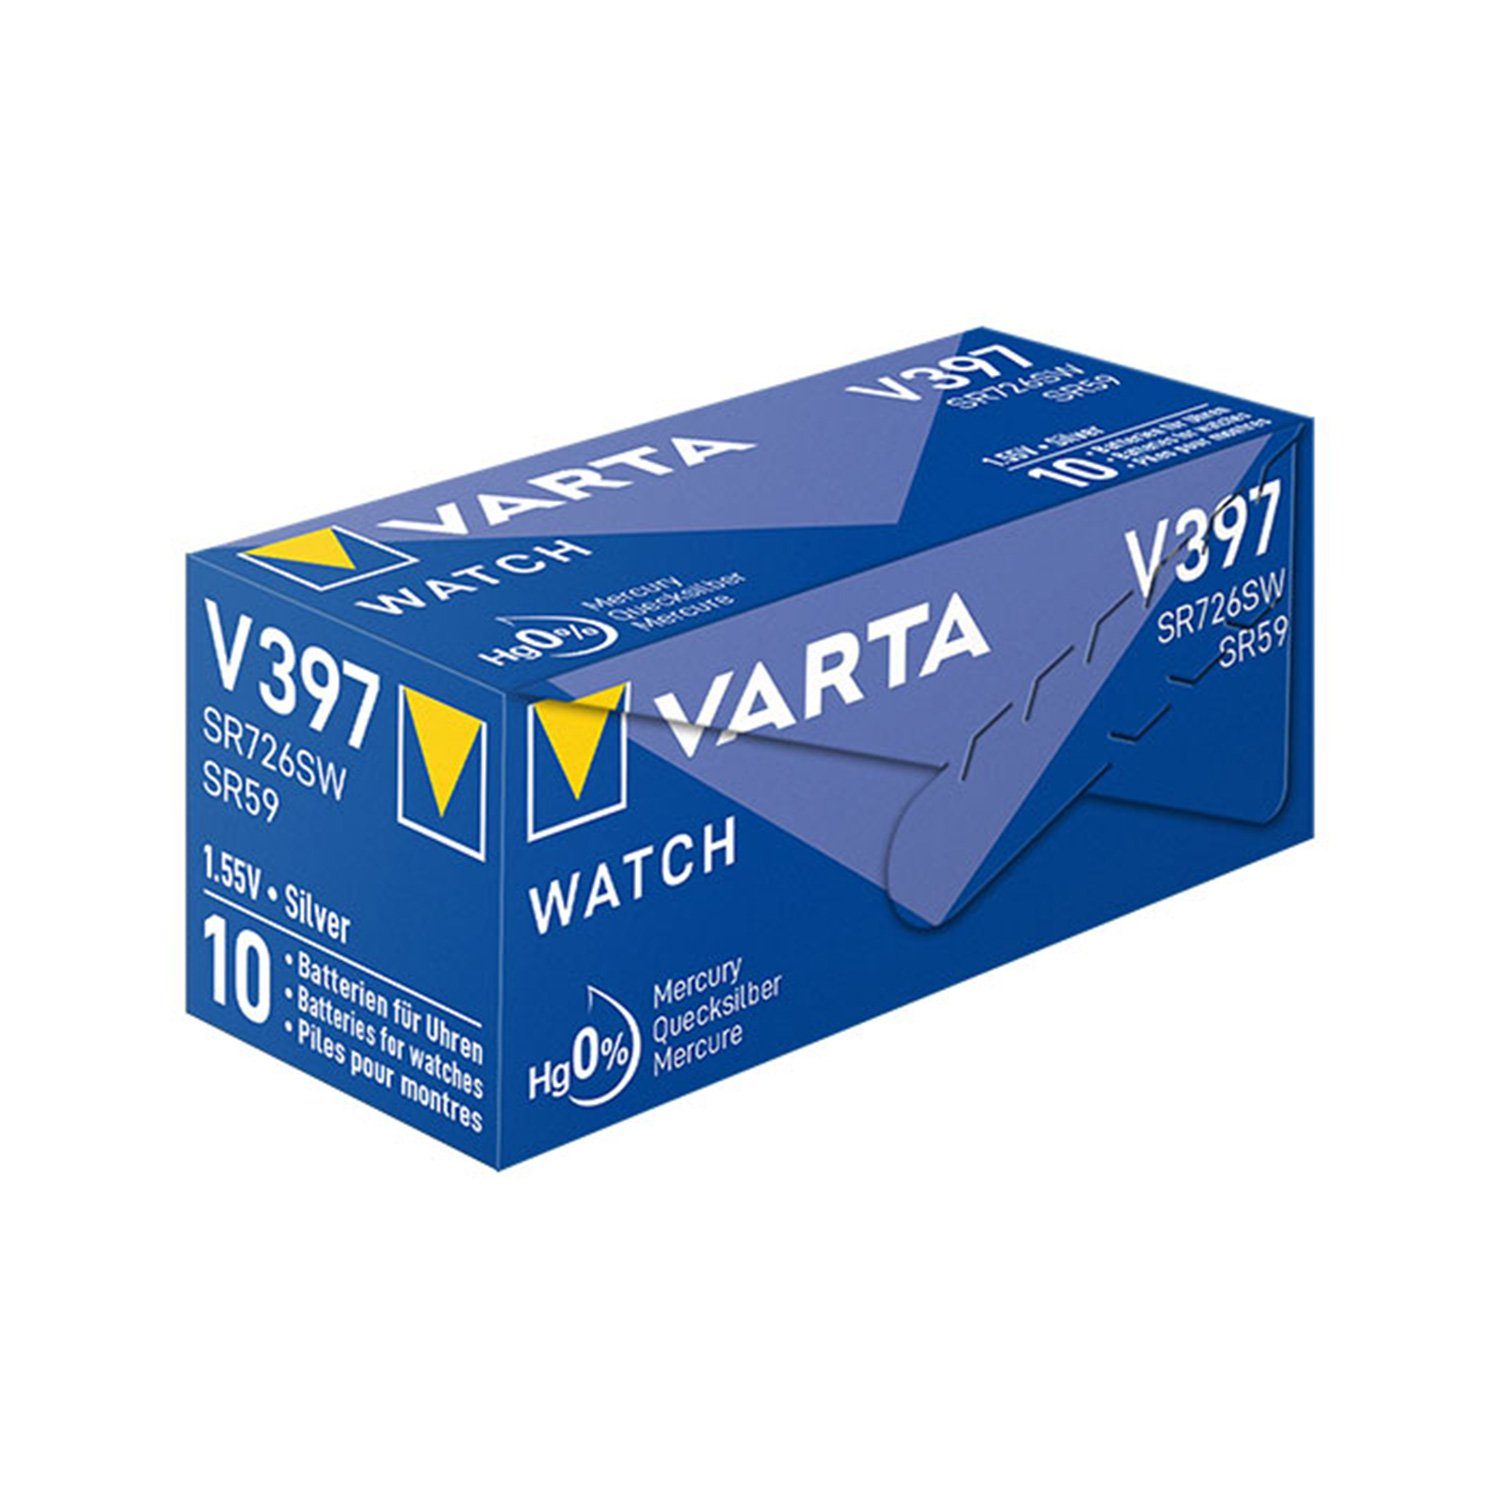 Knopfzelle Batterie VARTA 397 Varta